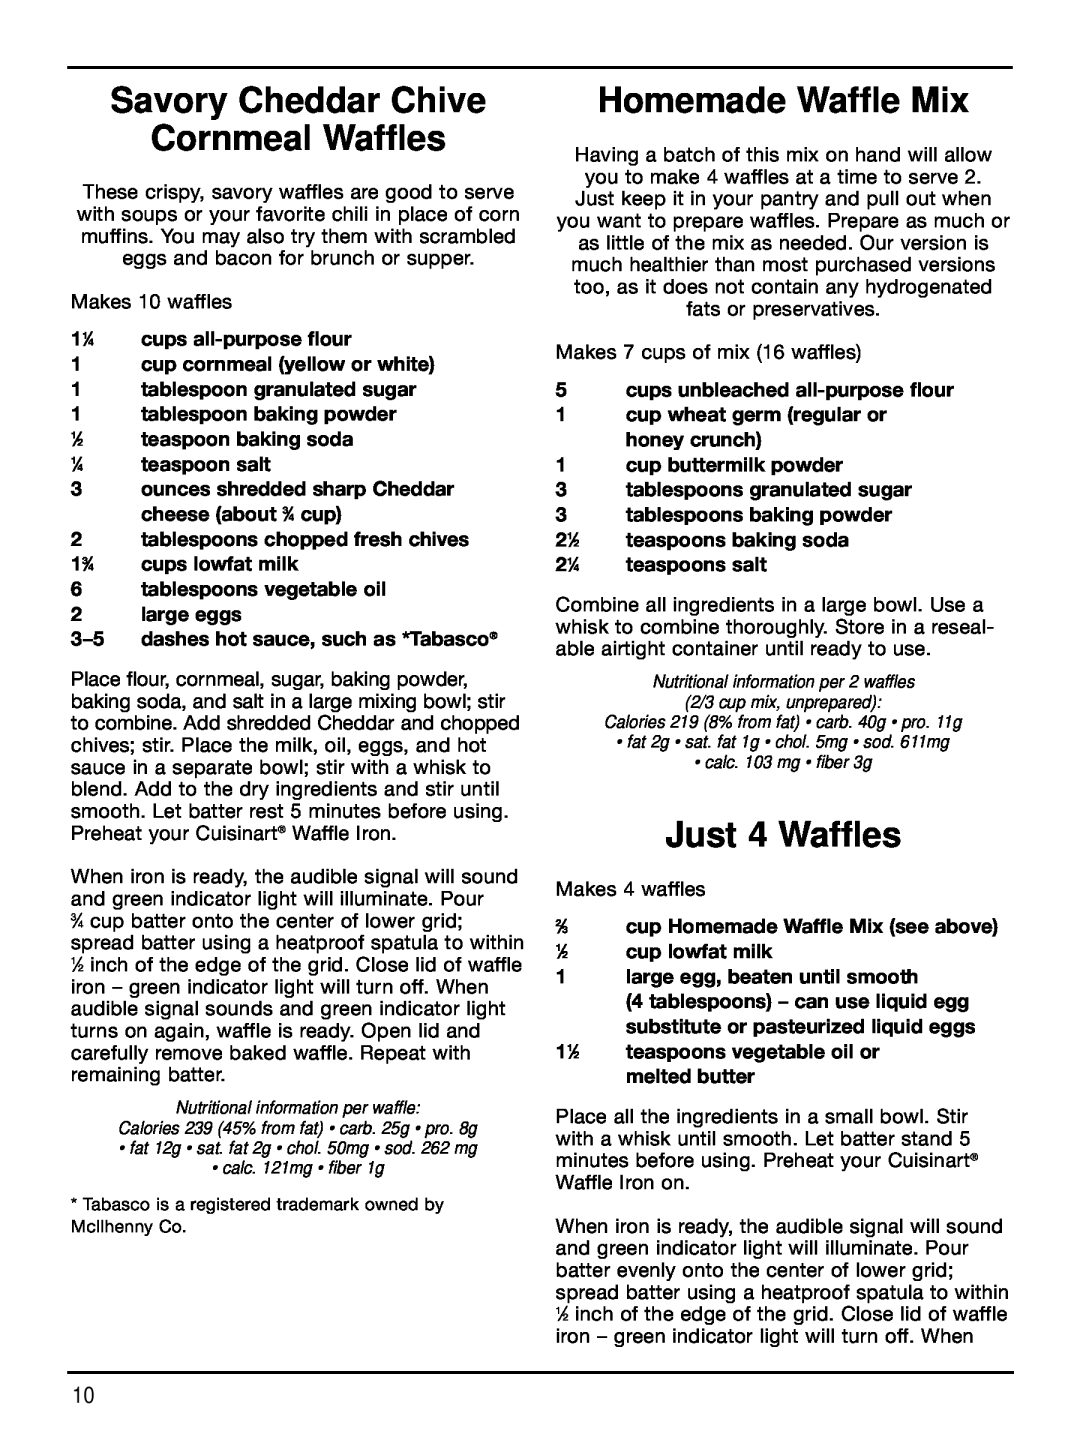 Cuisinart WAF-2B manual Savory Cheddar Chive Cornmeal Waffles, Homemade Waffle Mix, Just 4 Waffles 